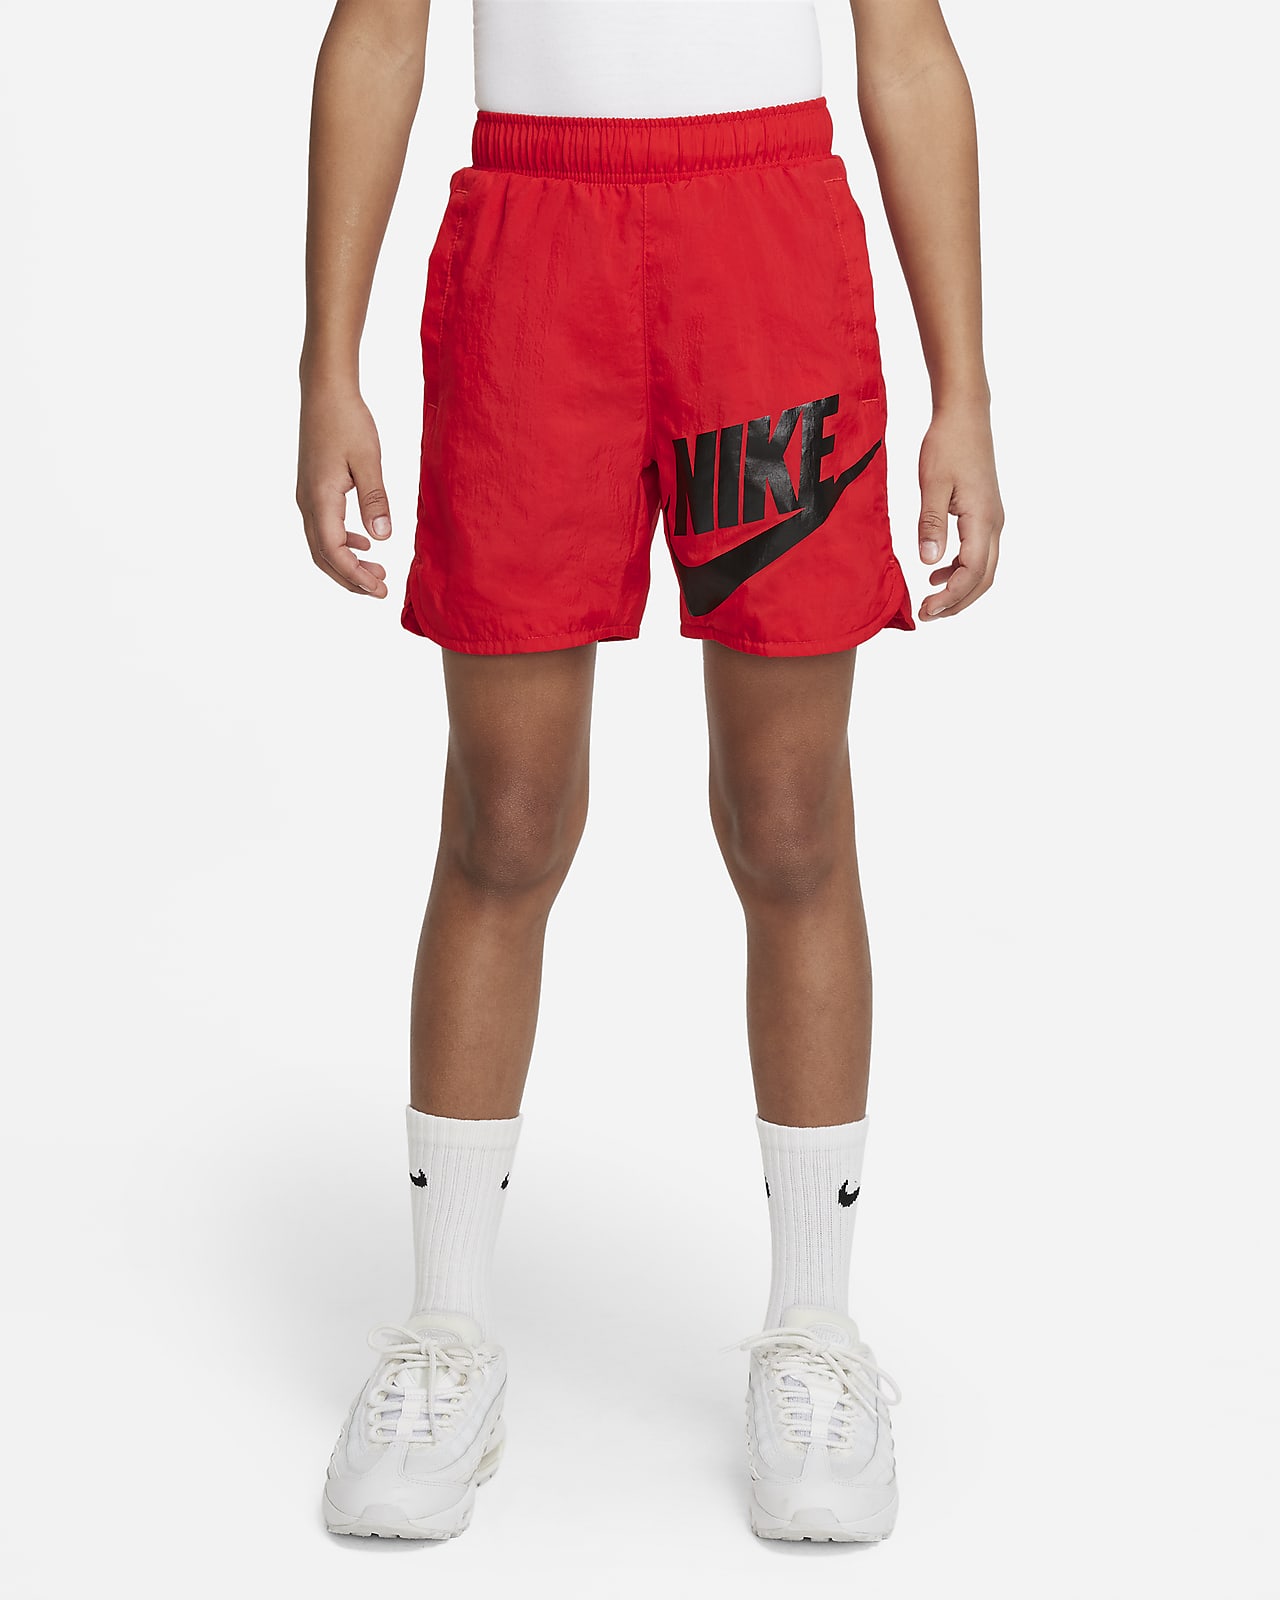 Nike circa шорты.